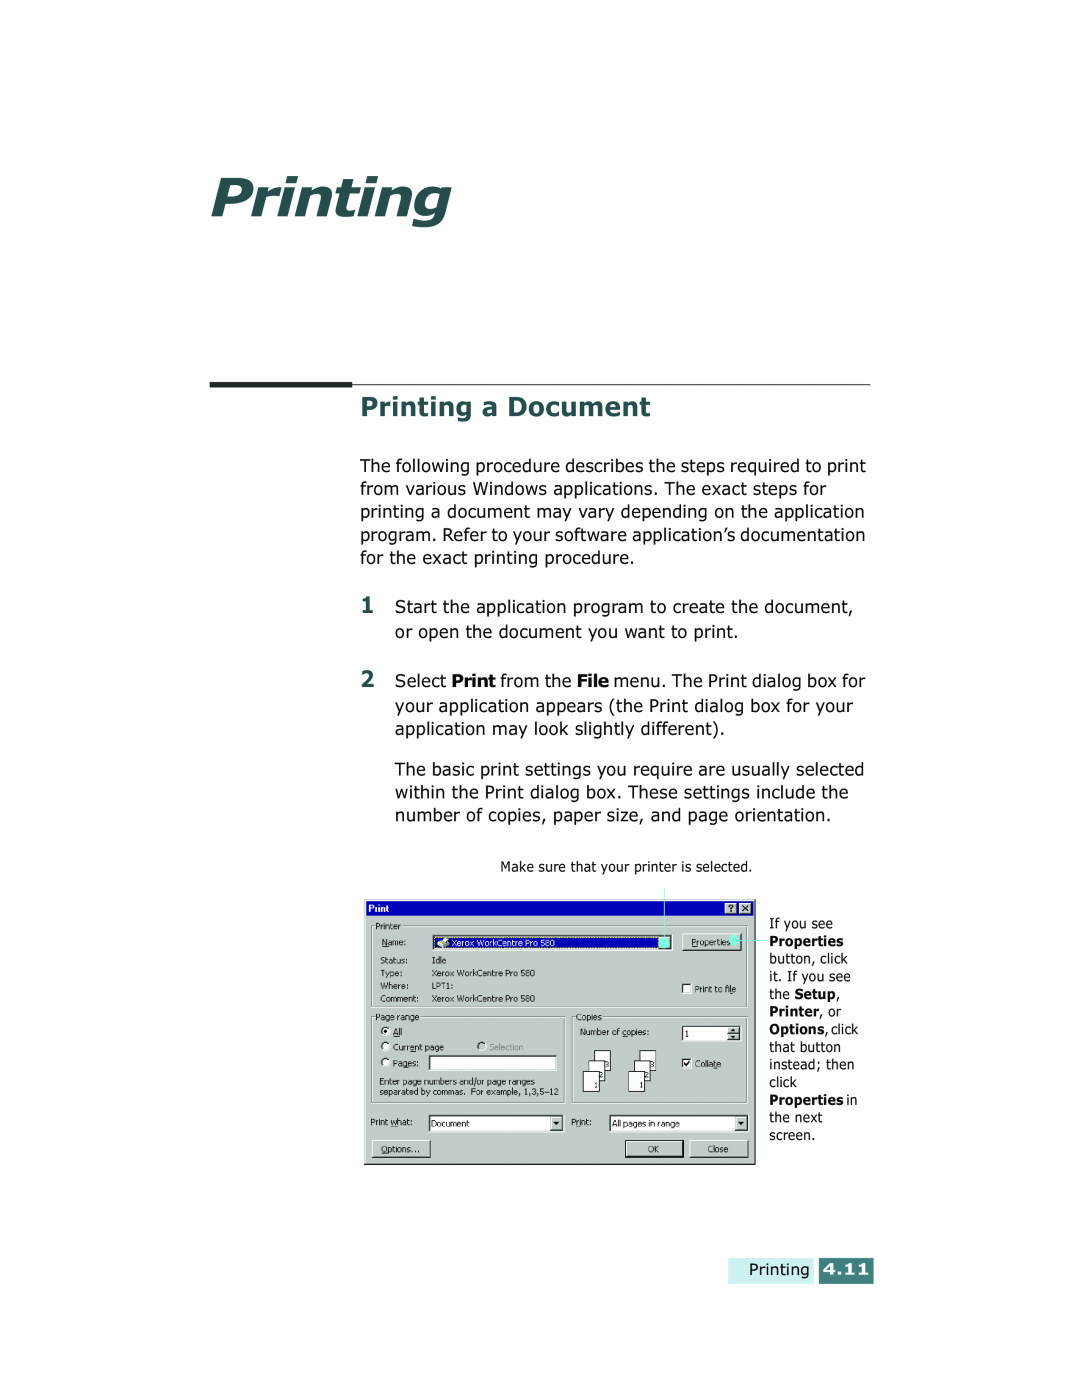 Xerox Pro 580 manual Printing a Document 